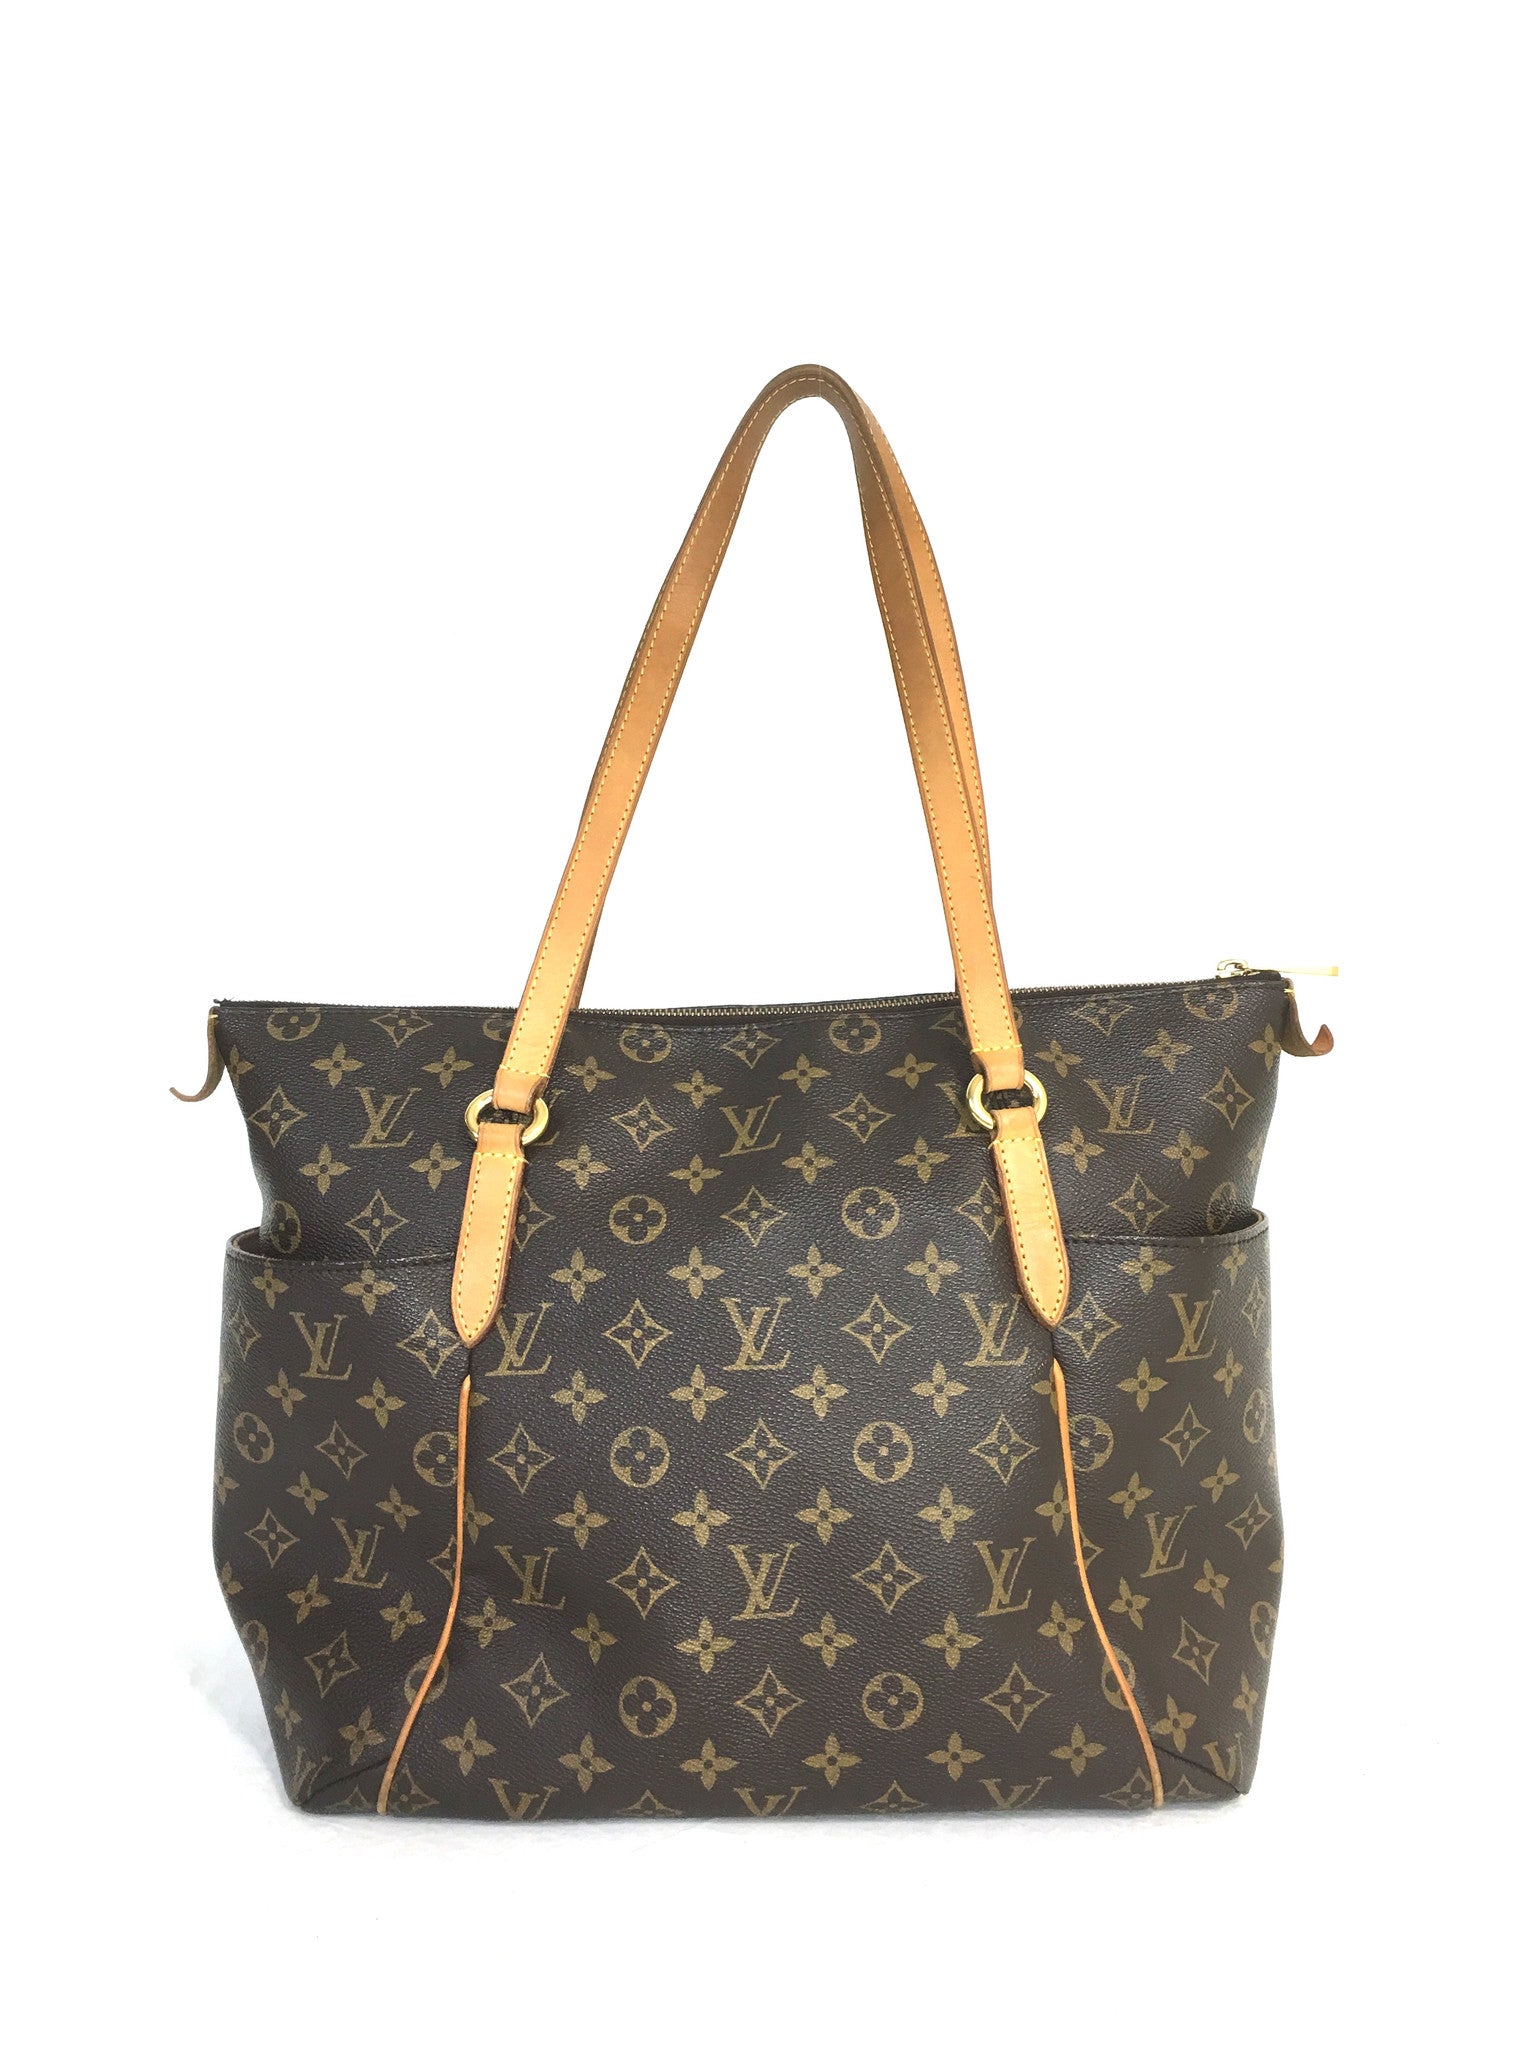 LV Bagatelle Bag: A Luxurious Accessory 😍